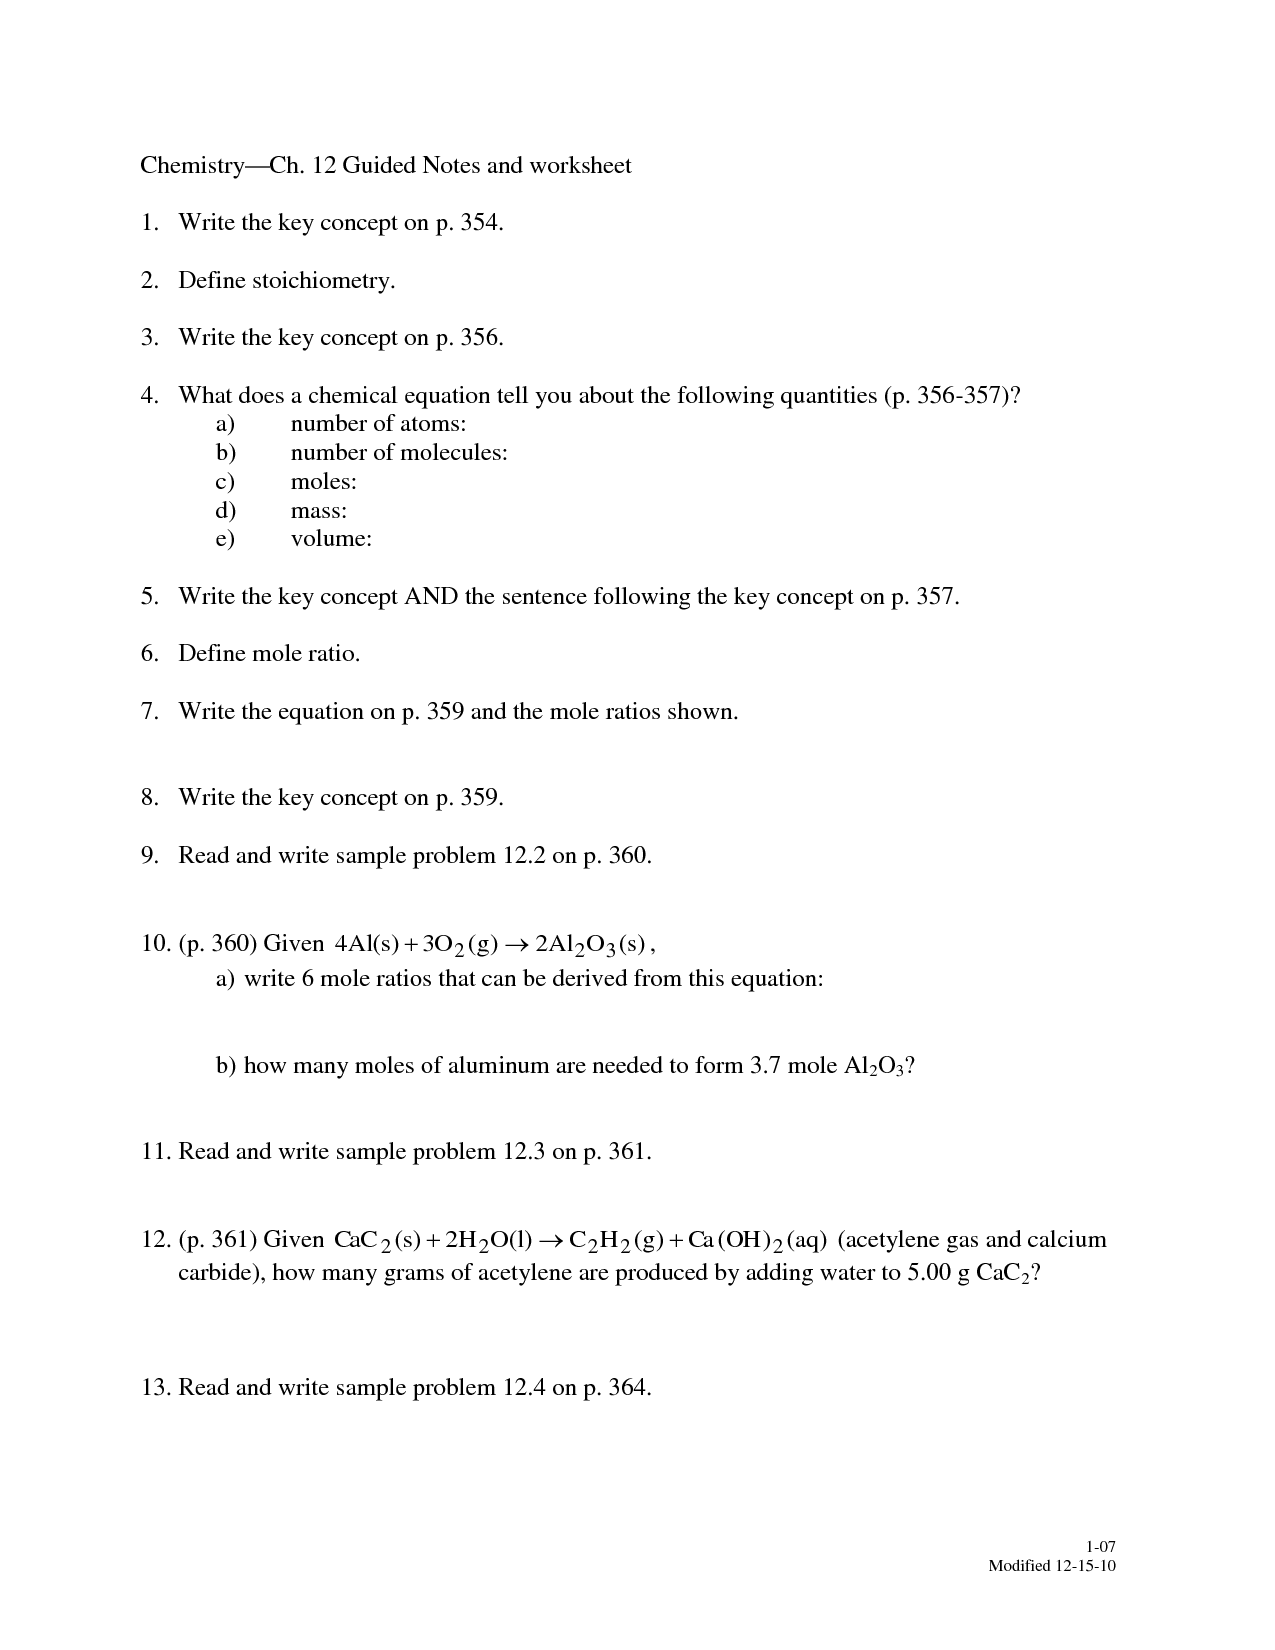 16 Best Images of Mole Ratio Worksheet Answer Key Ch 12 - Mole Ratio